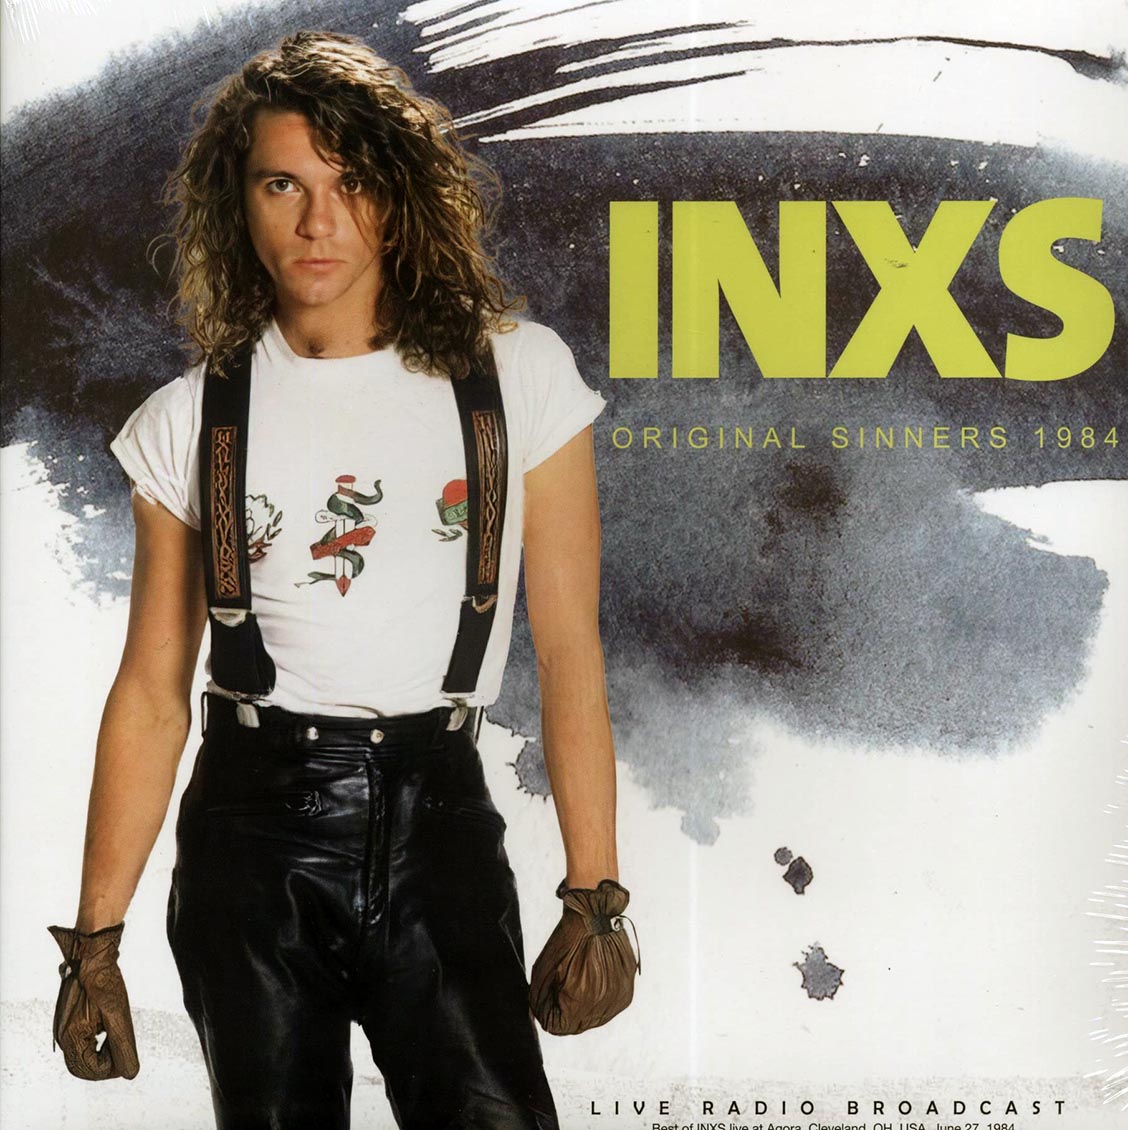 INXS - Original Sinners 1984: Live At Agora, Cleveland - Vinyl LP